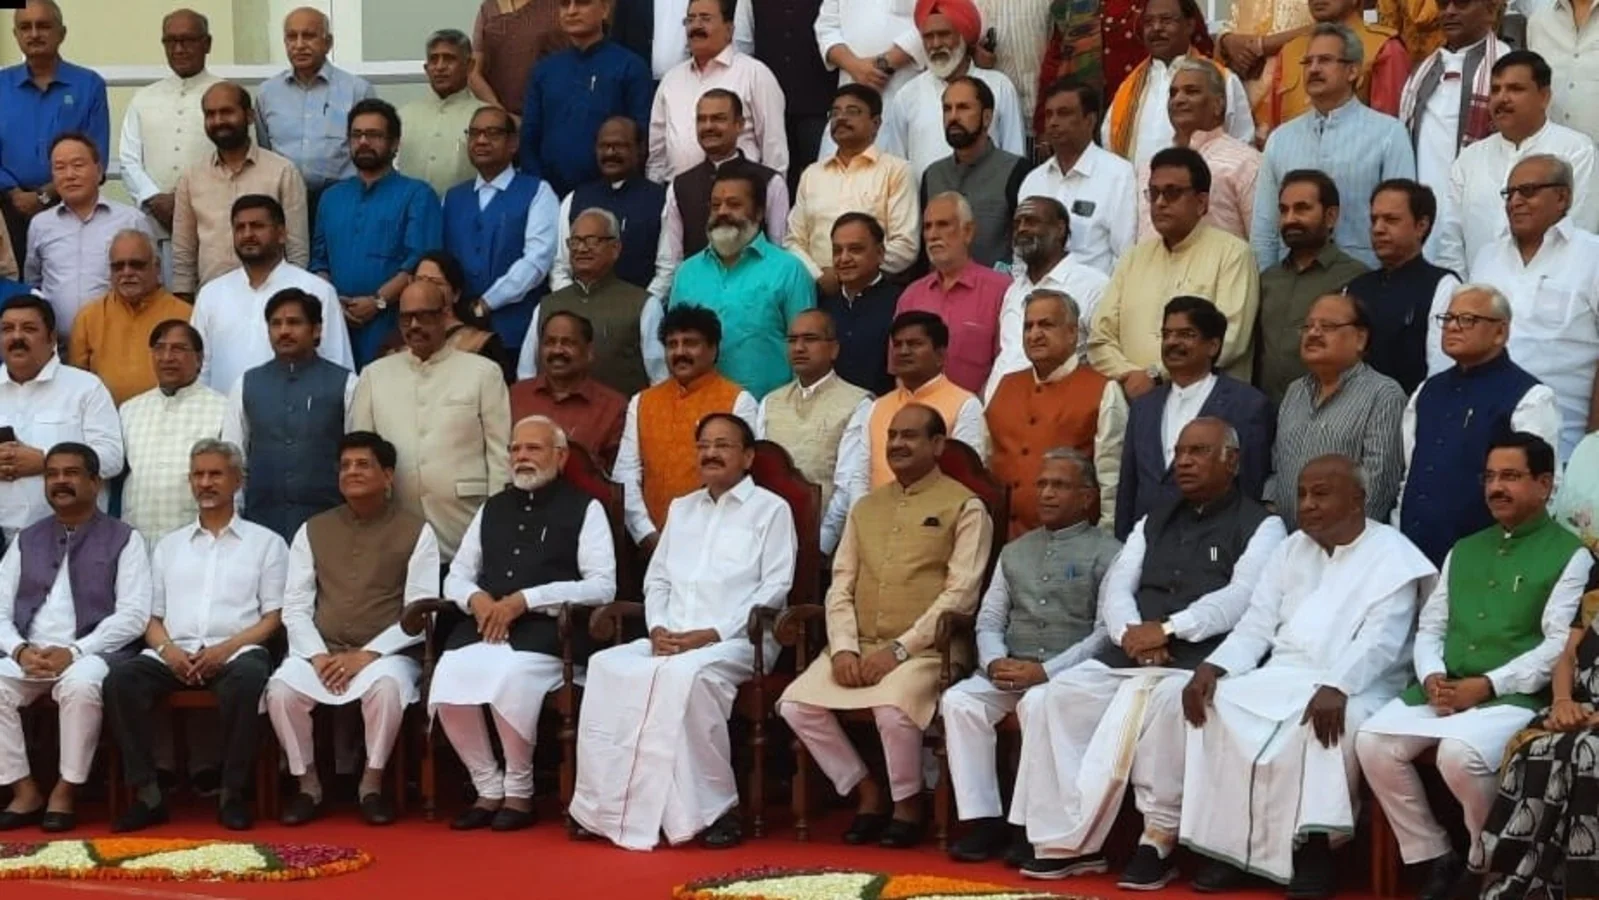 Retiring members of Rajya Sabha pose for photograph with PM Modi, others